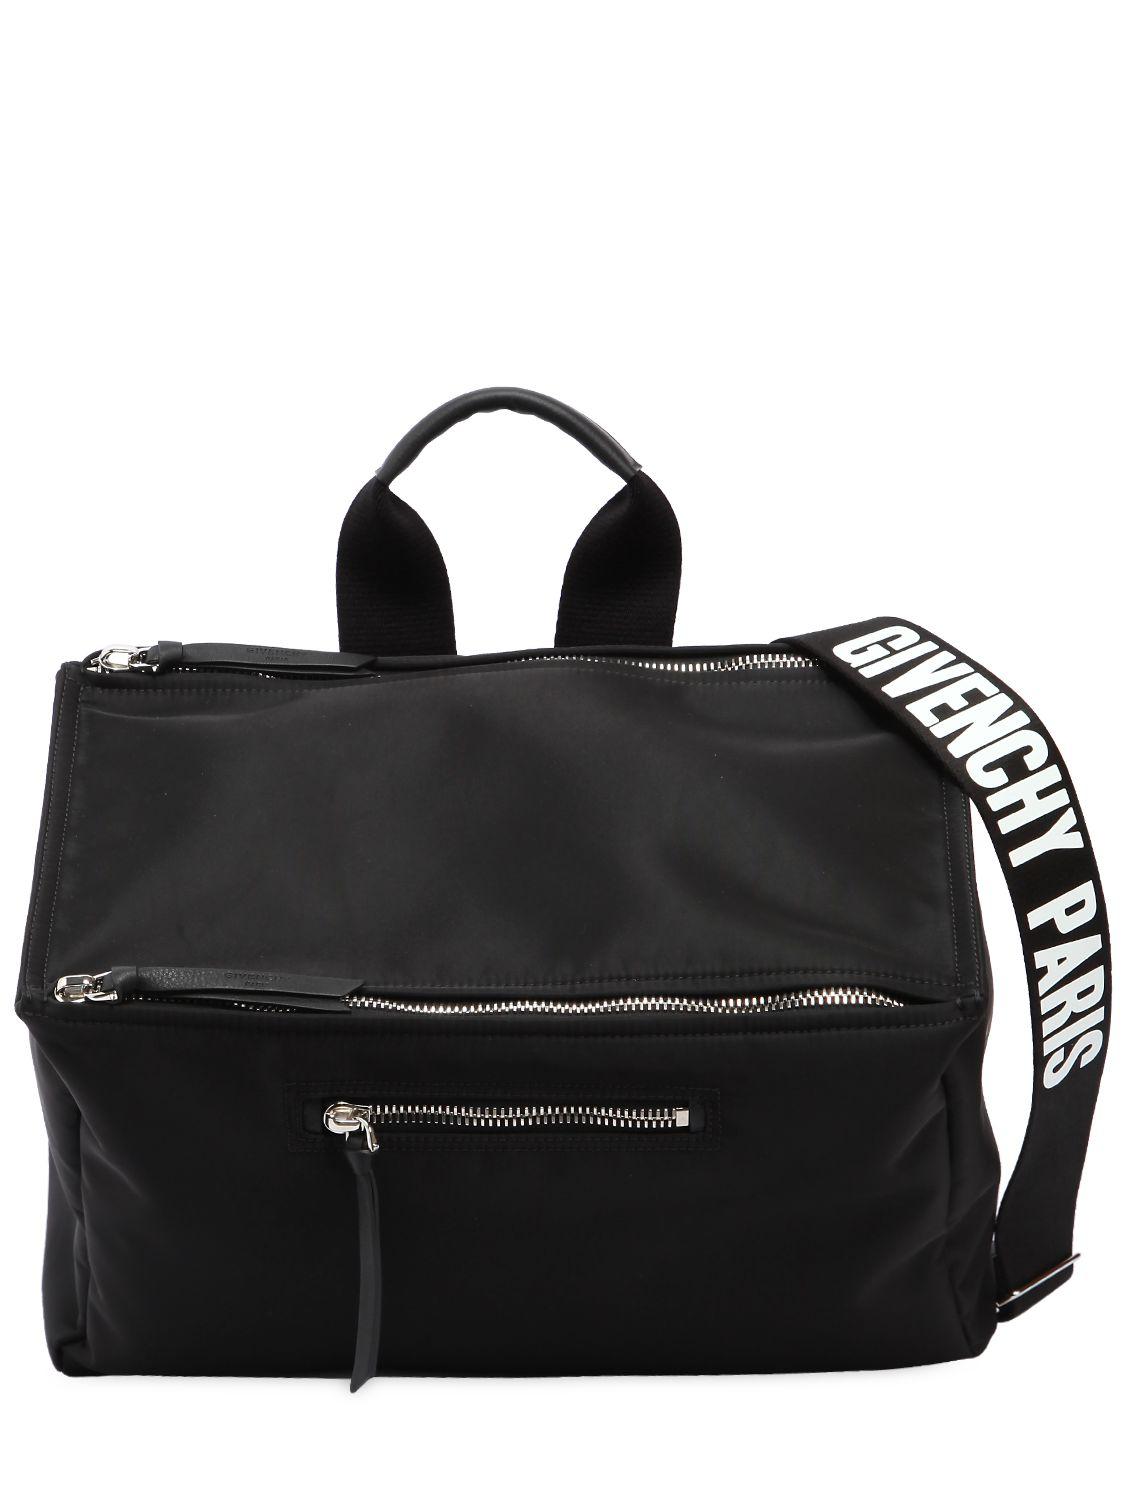 Givenchy Pandora Nylon Bag in Black for Men | Lyst